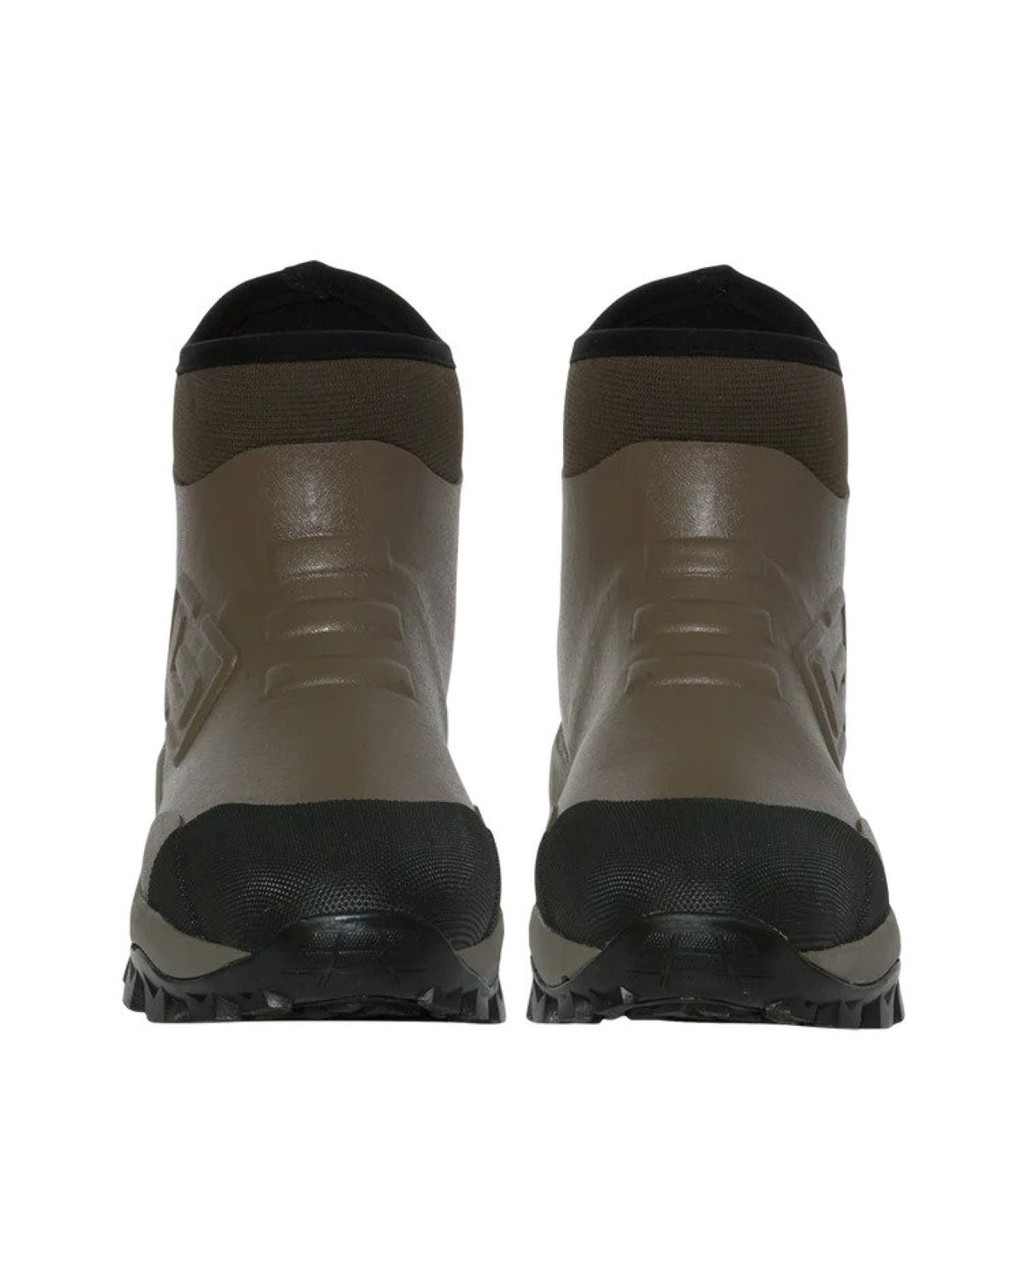 Banded Black Label Elite Series RZ Camp Shoe Rubber - Marsh Brown -Size 10